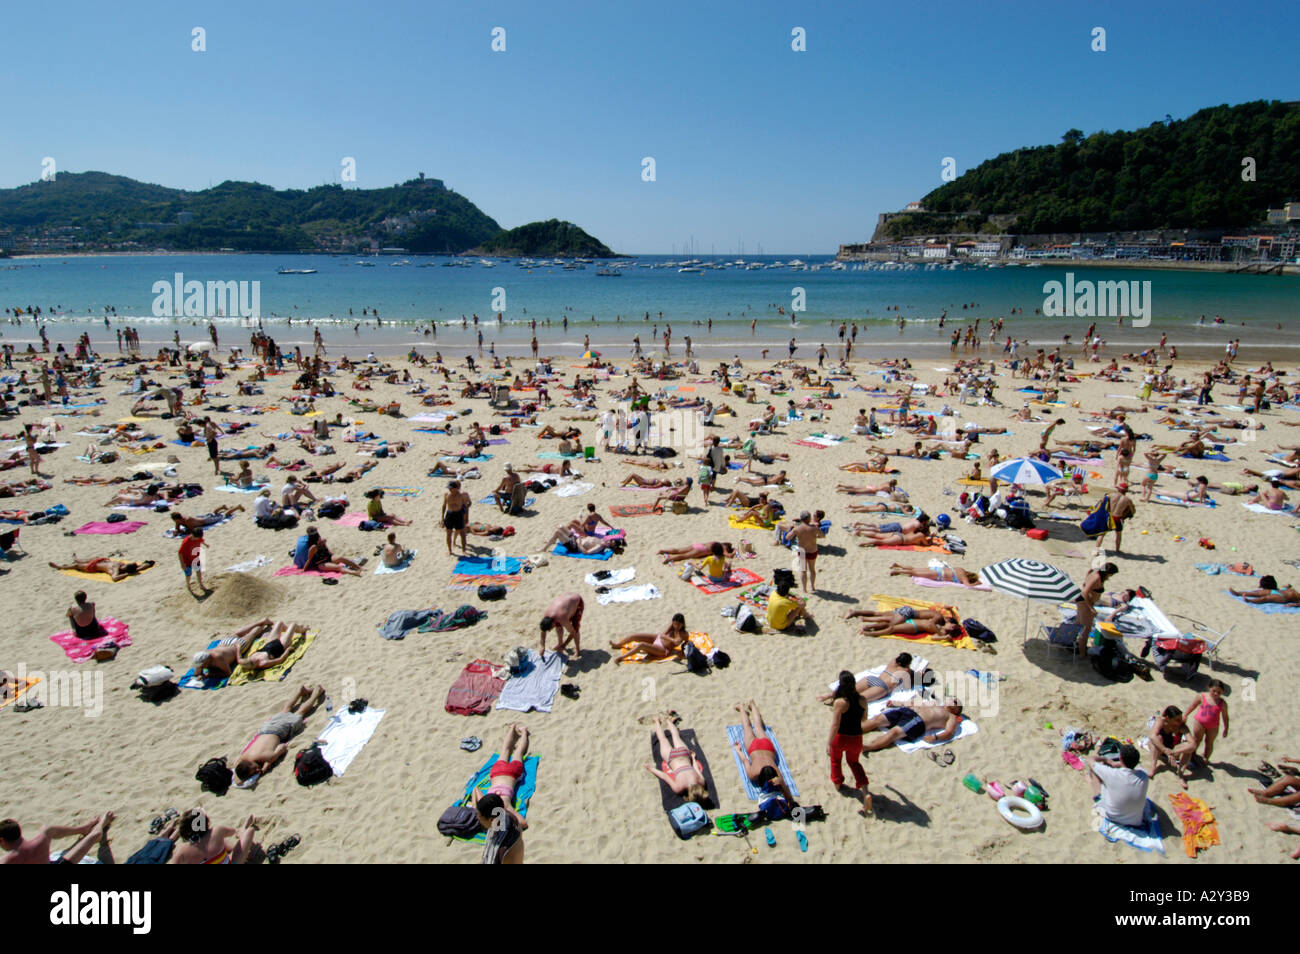 People on the beach at La Concha beach, San Sebastian, Spain Stock Photo